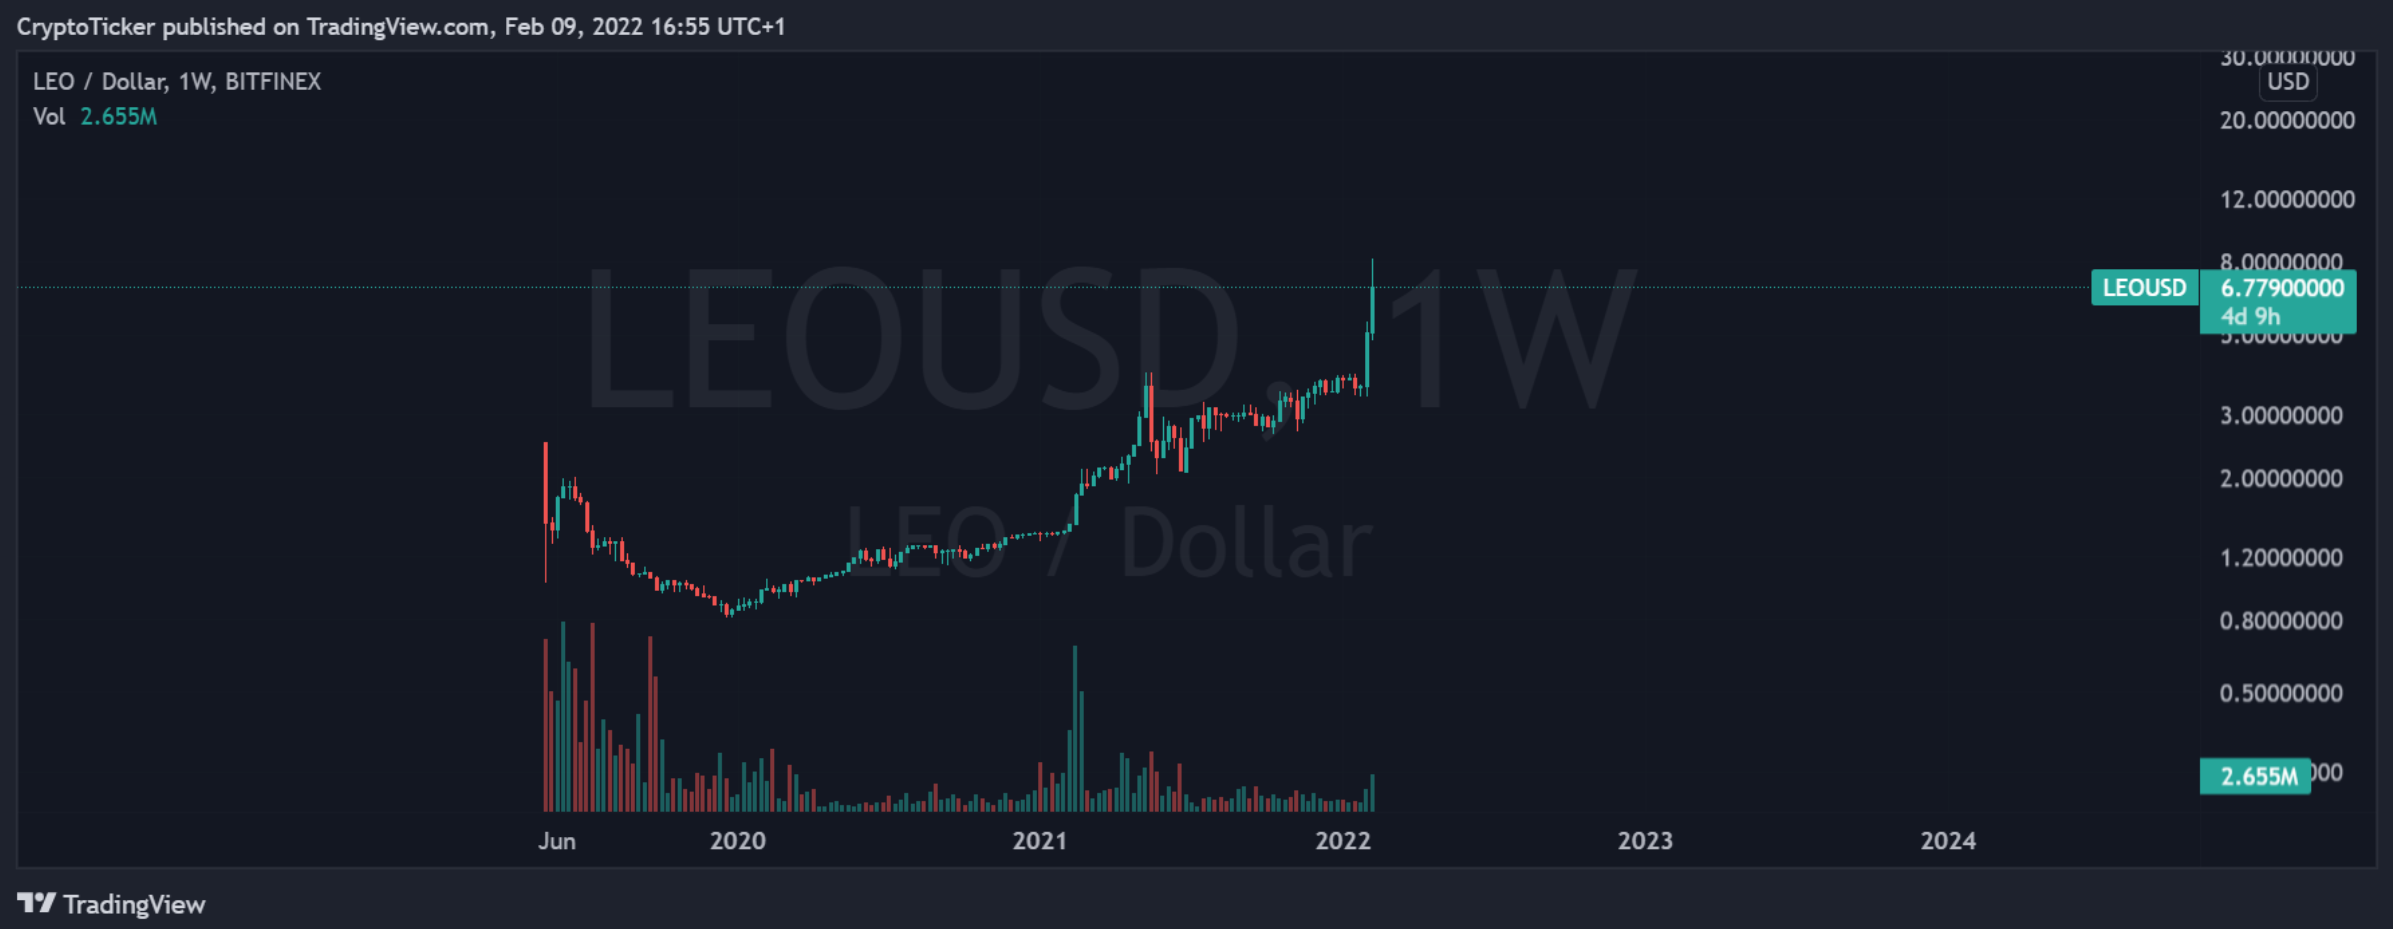 LRO price chart - LEO/USD 1-week chart